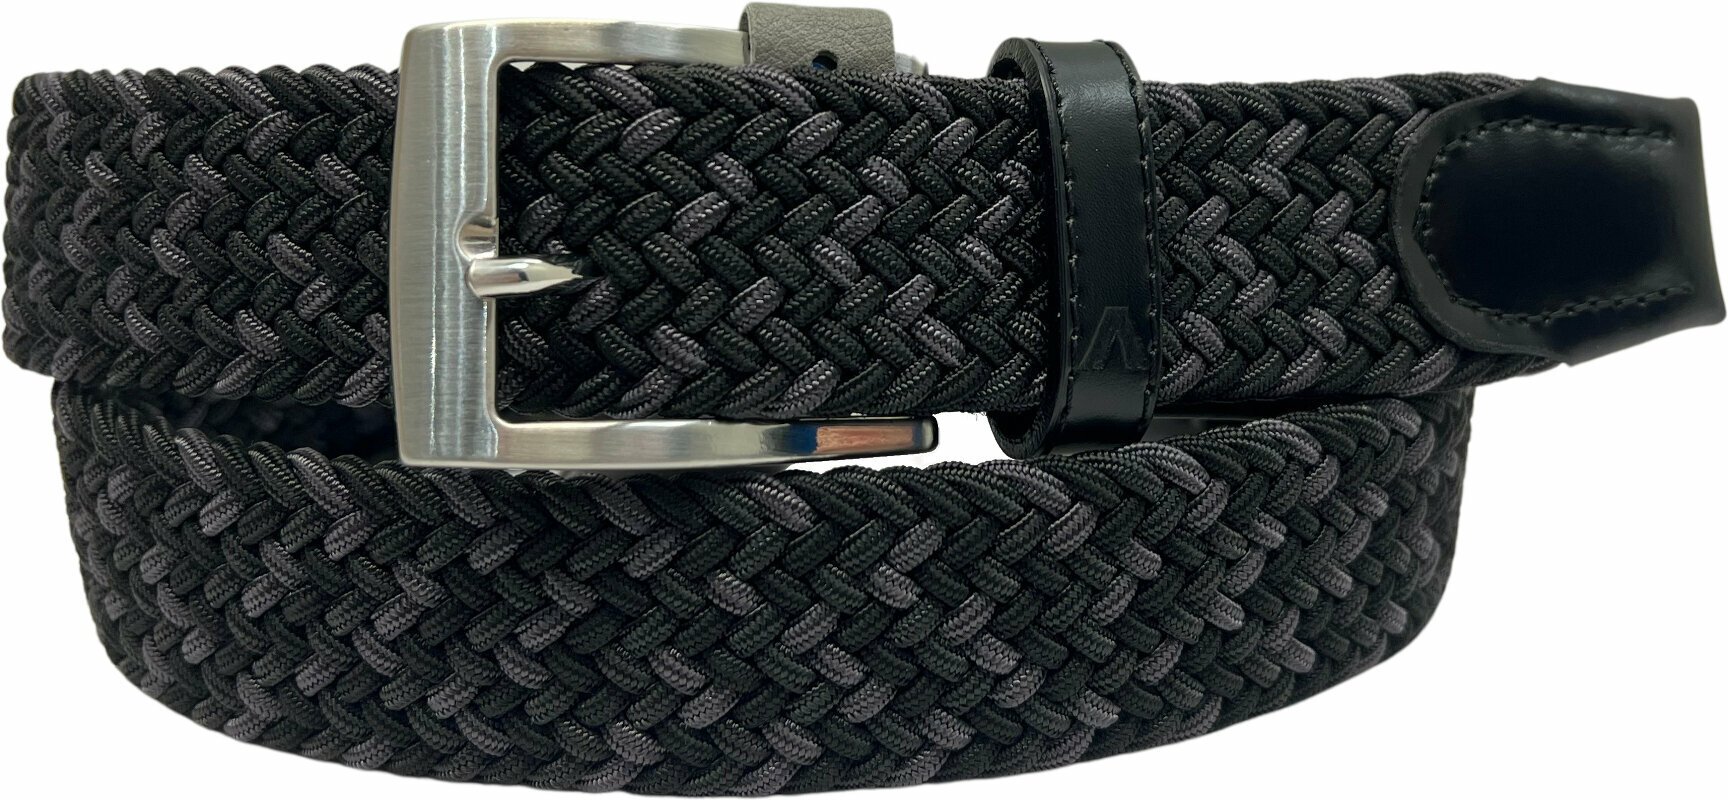 Pásek Alberto Gürtel Multicolor Braided Belt Black/Grey 100